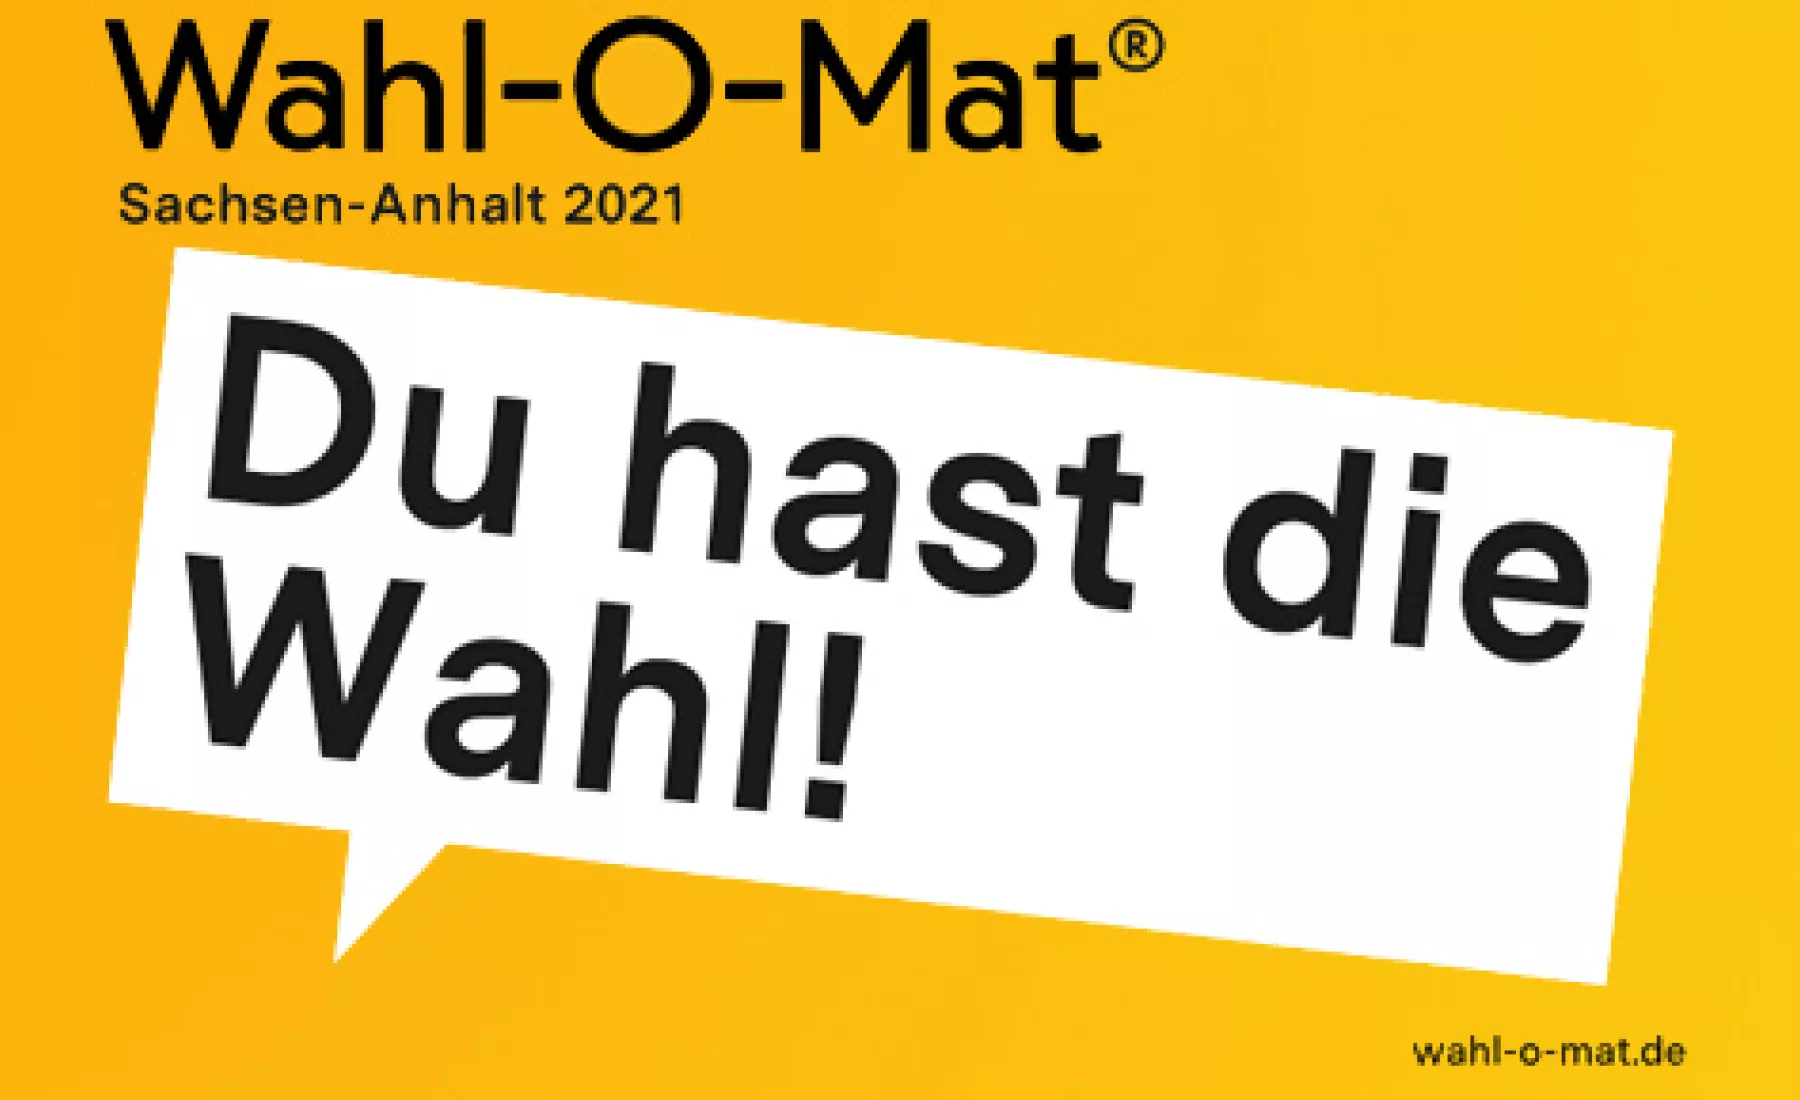 Wahl-O-Mat 2021